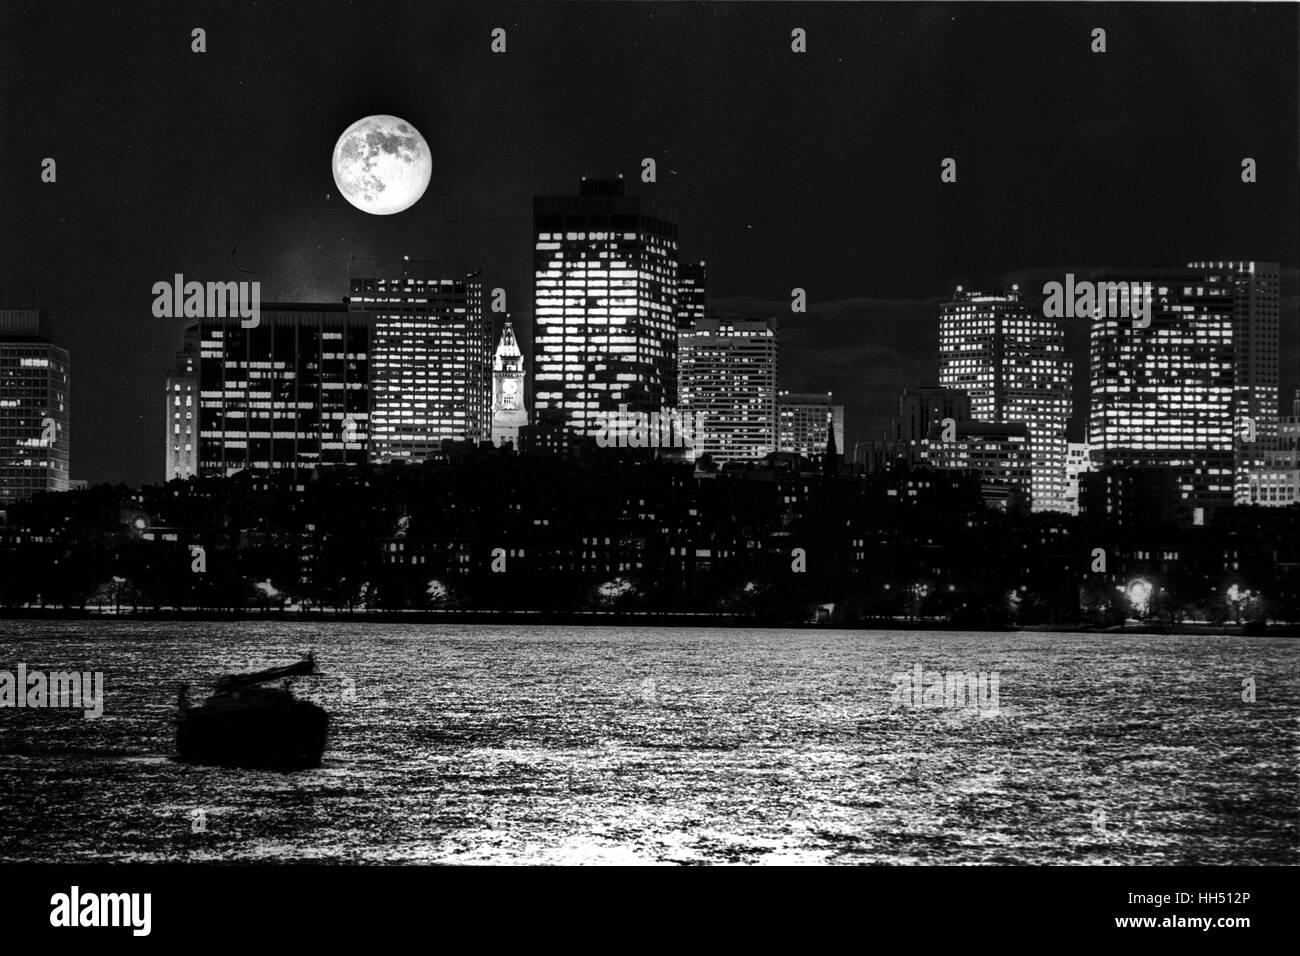 full moon over the city of Boston mass photo by bill belknap 1986 Stock Photo